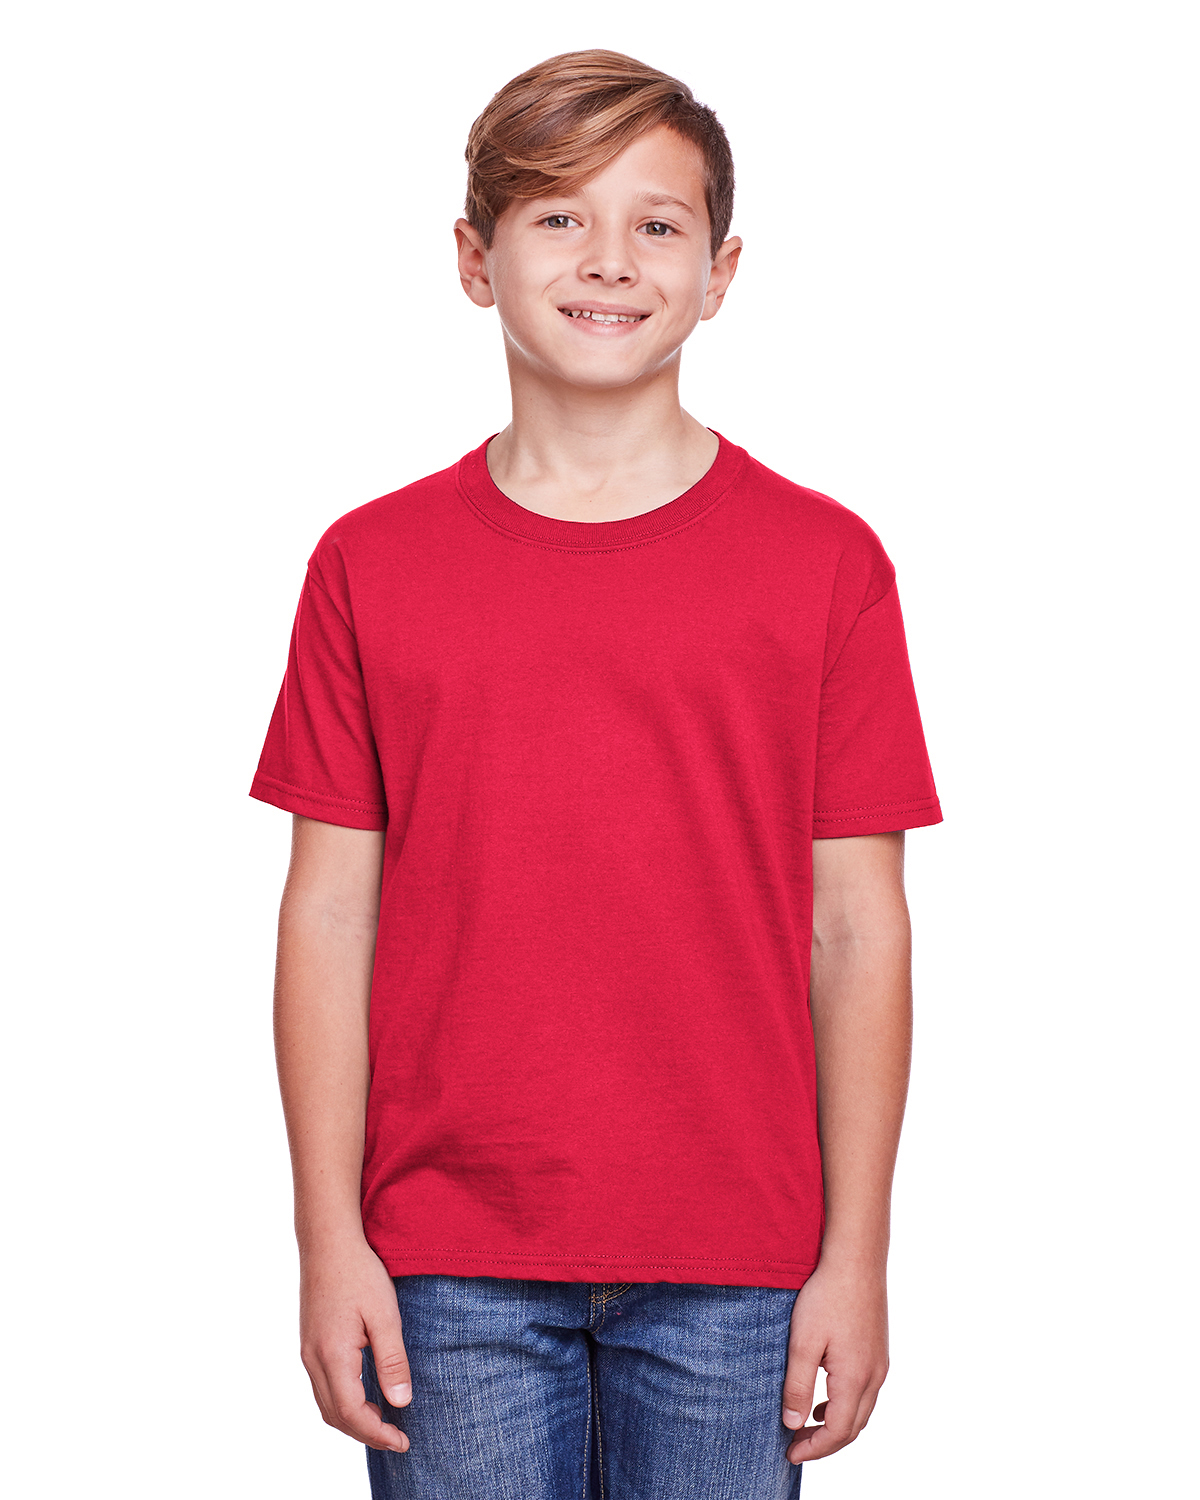 true red white blue t shirt